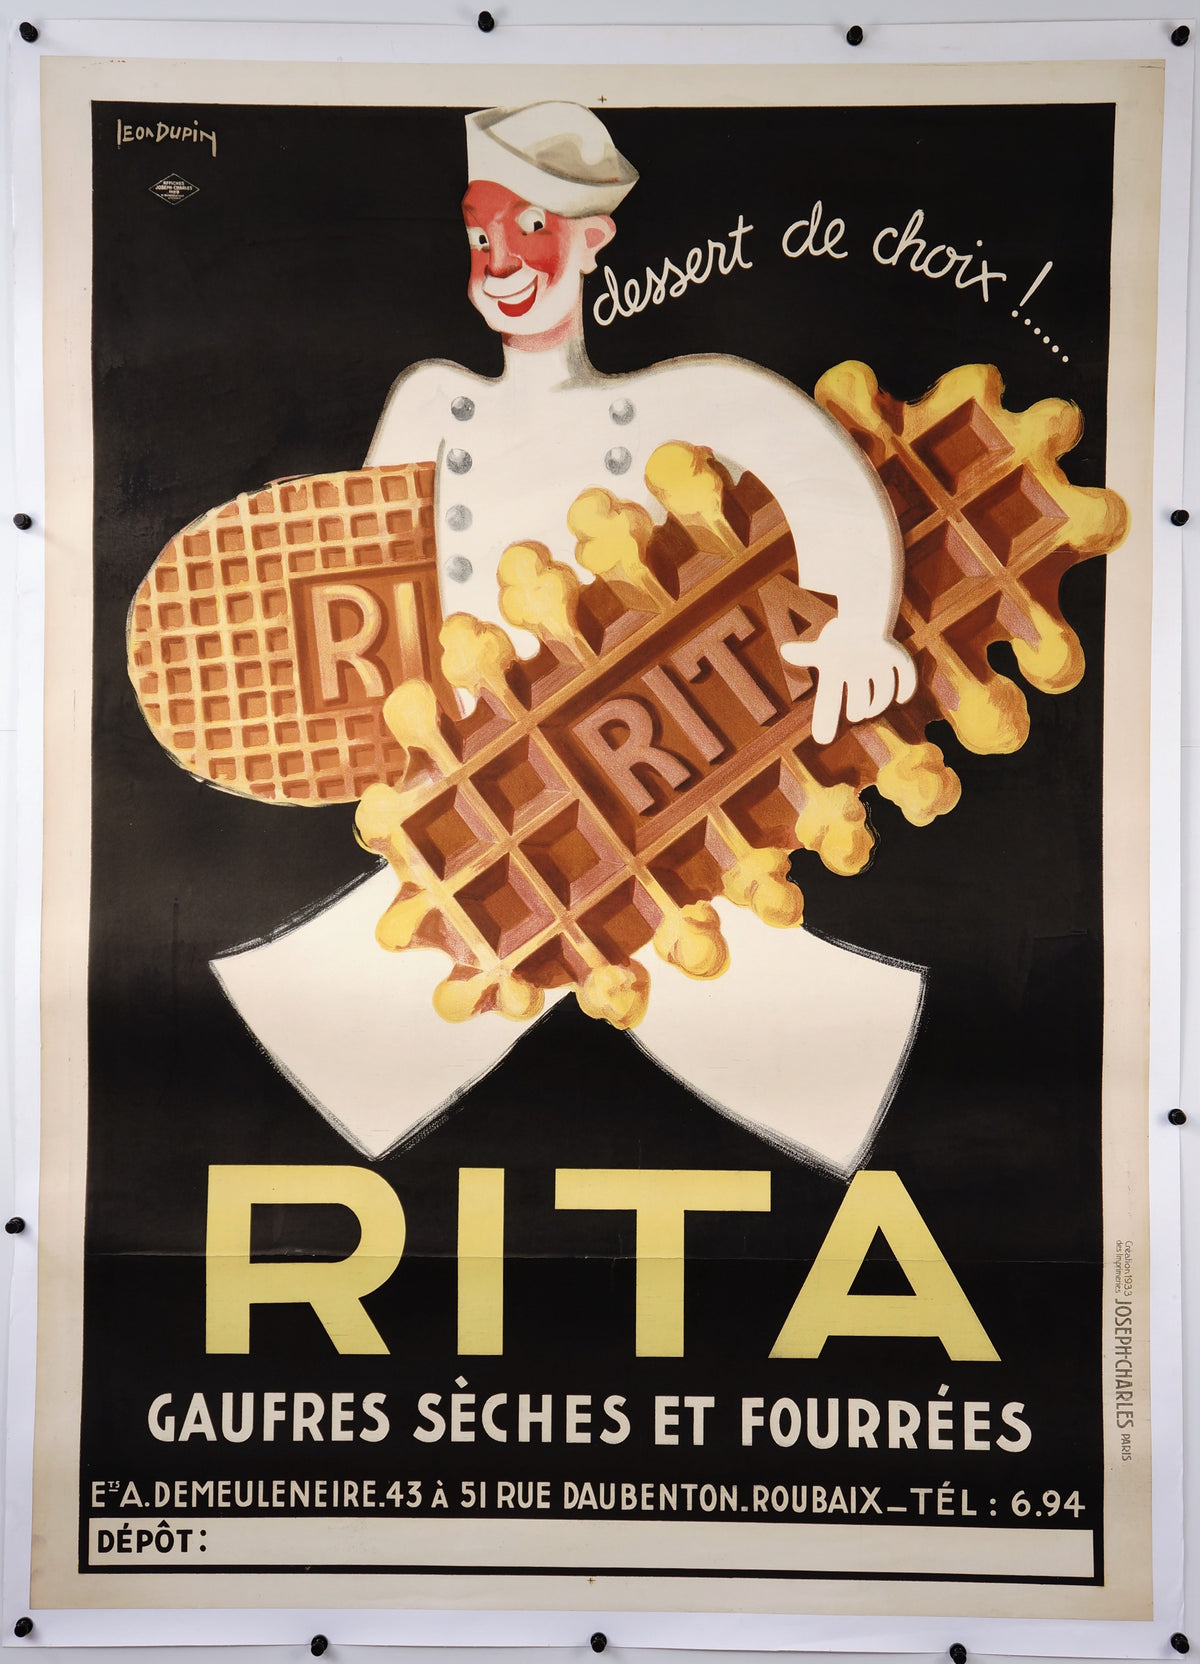 Rita By Léon Dupin - Authentic Vintage Poster